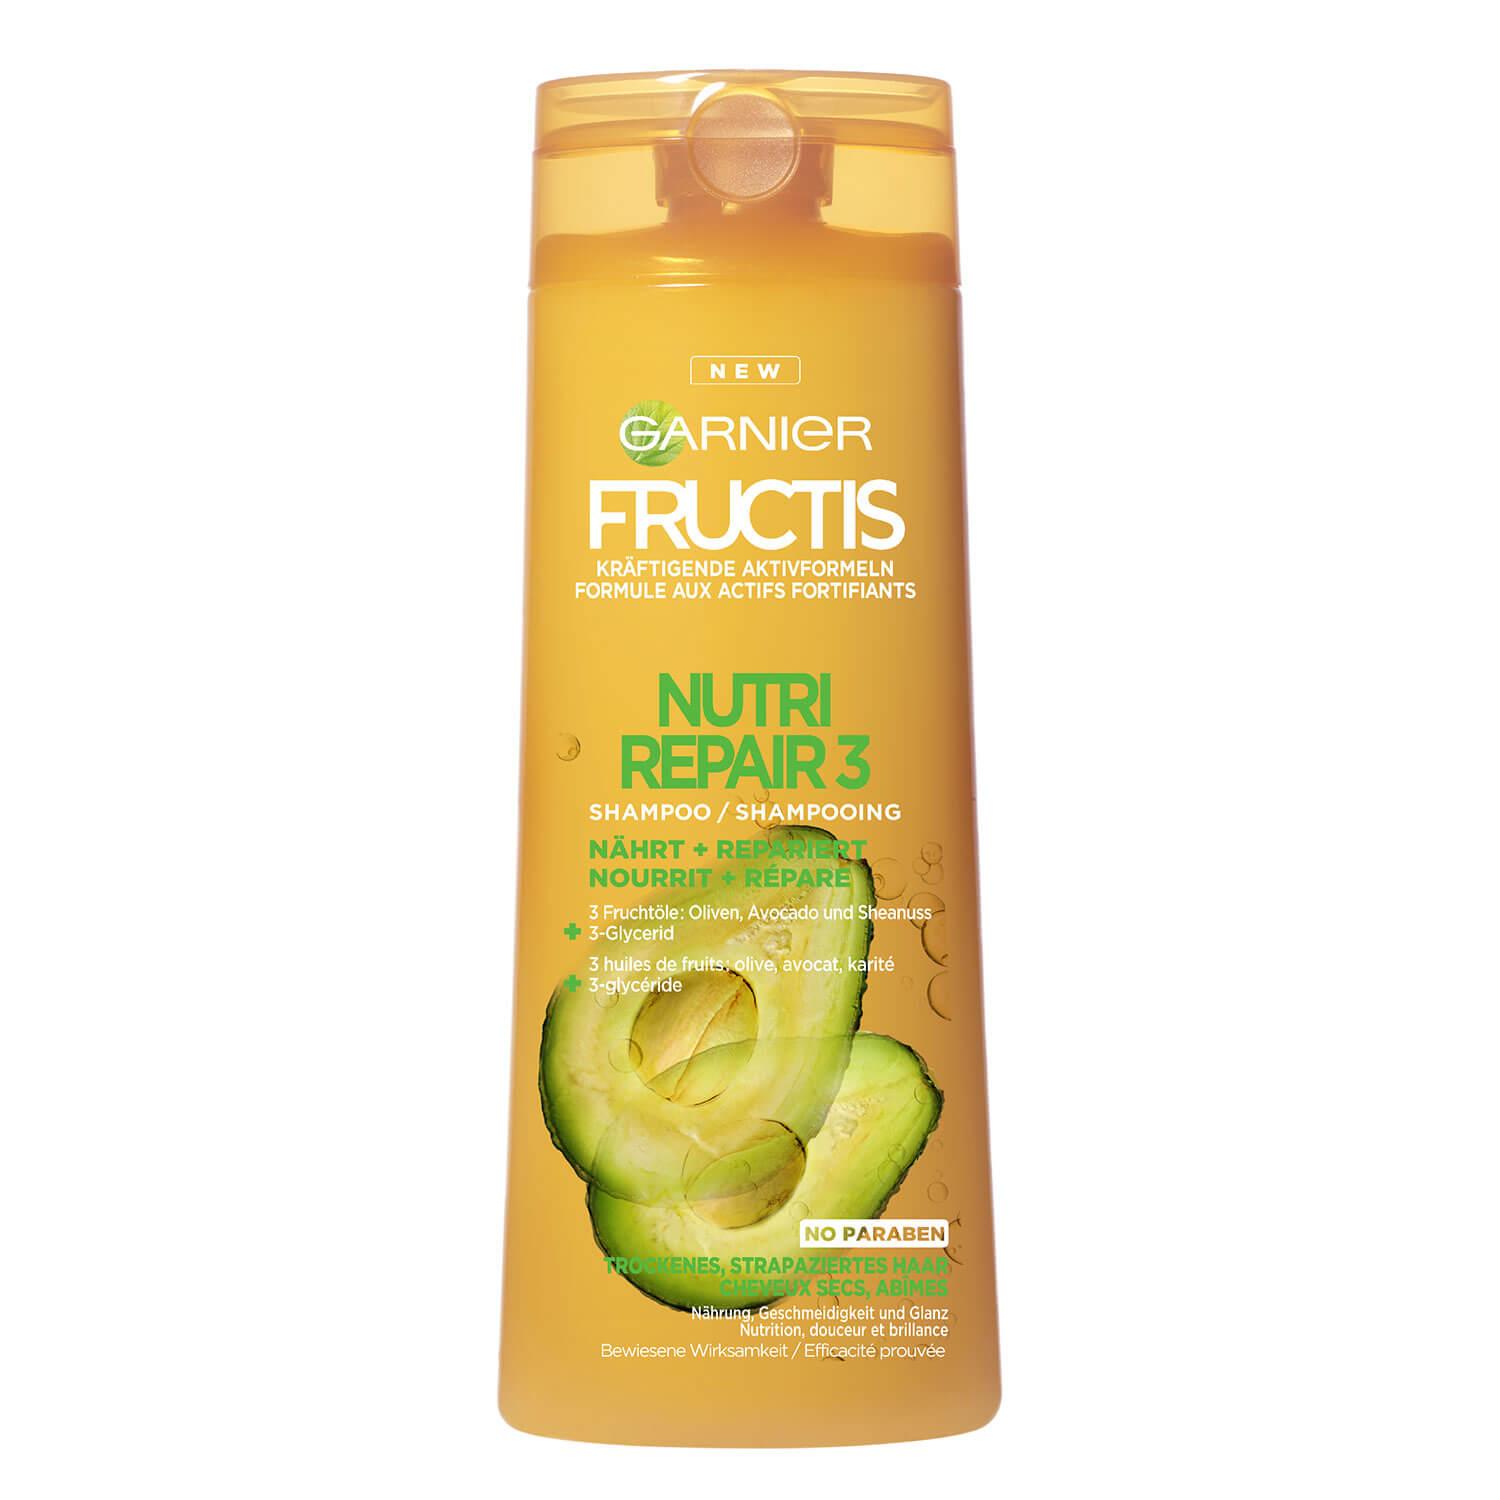 Fructis - Nutri Repair 3 Powerful Shampoo